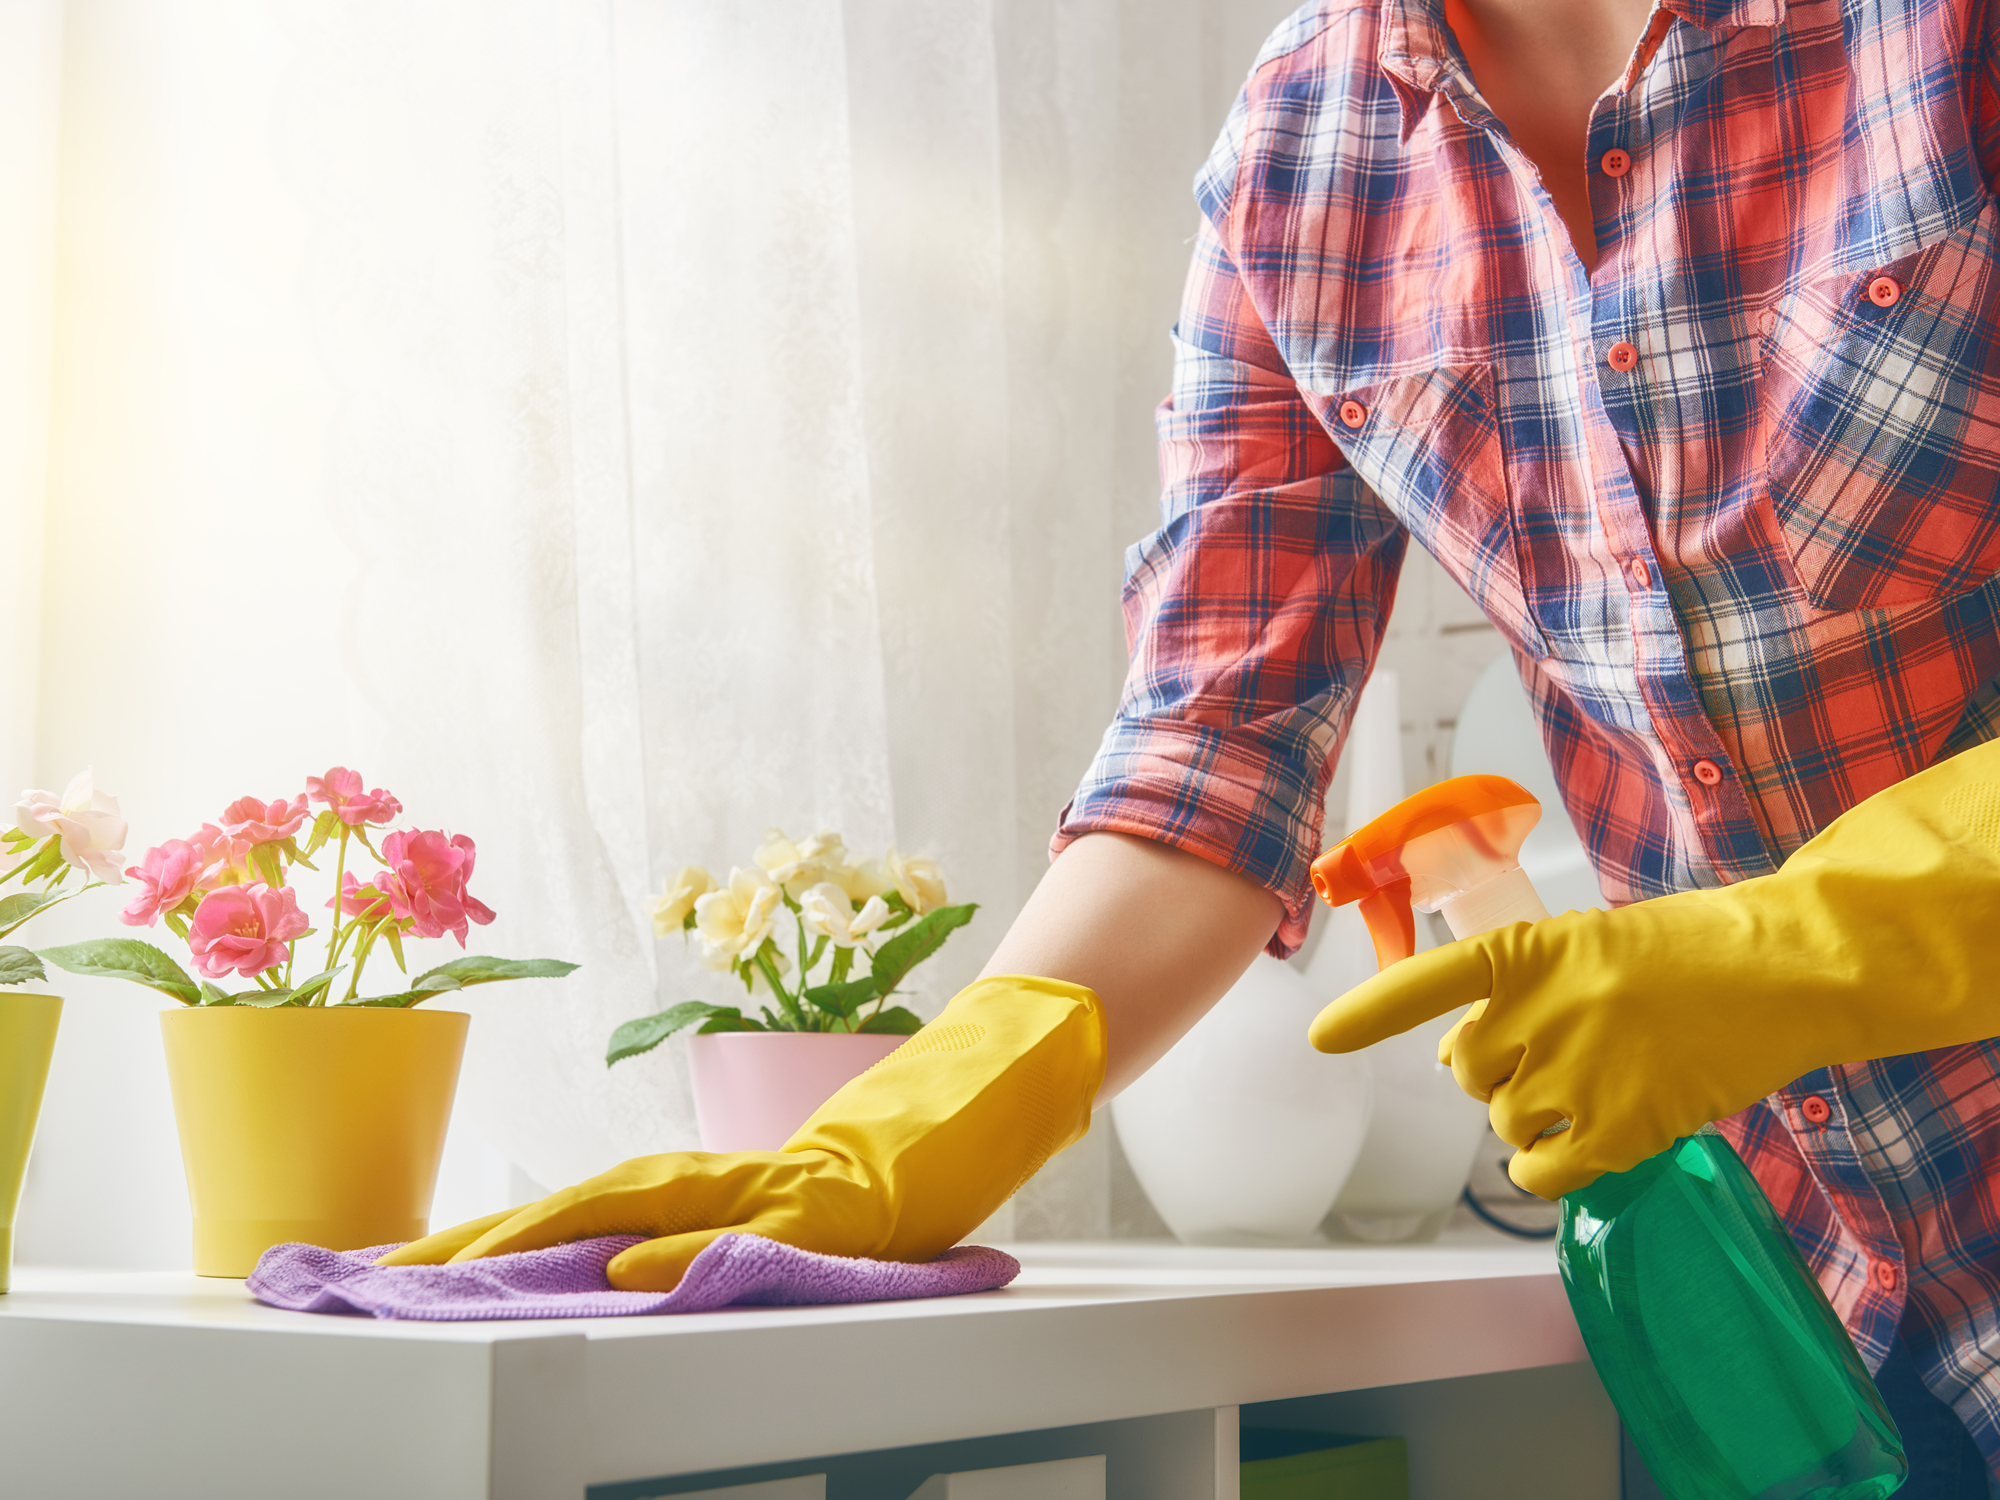 How housework harms like a 20-year smoking habit